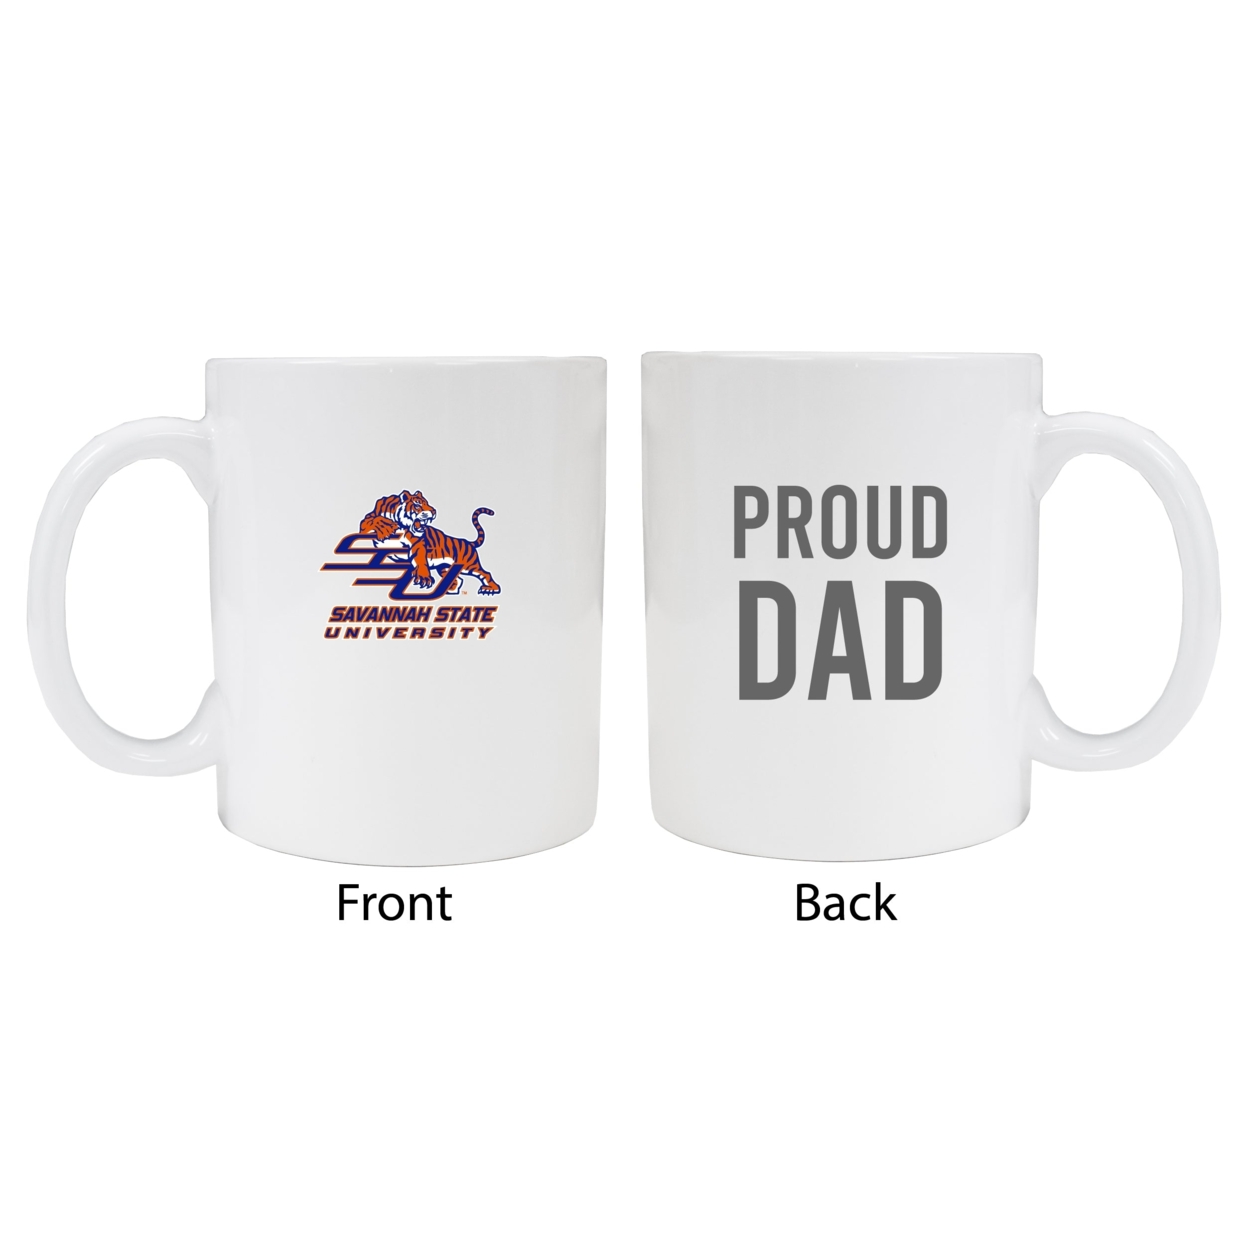 Savannah State University Proud Dad Ceramic Coffee Mug - White (2 Pack)